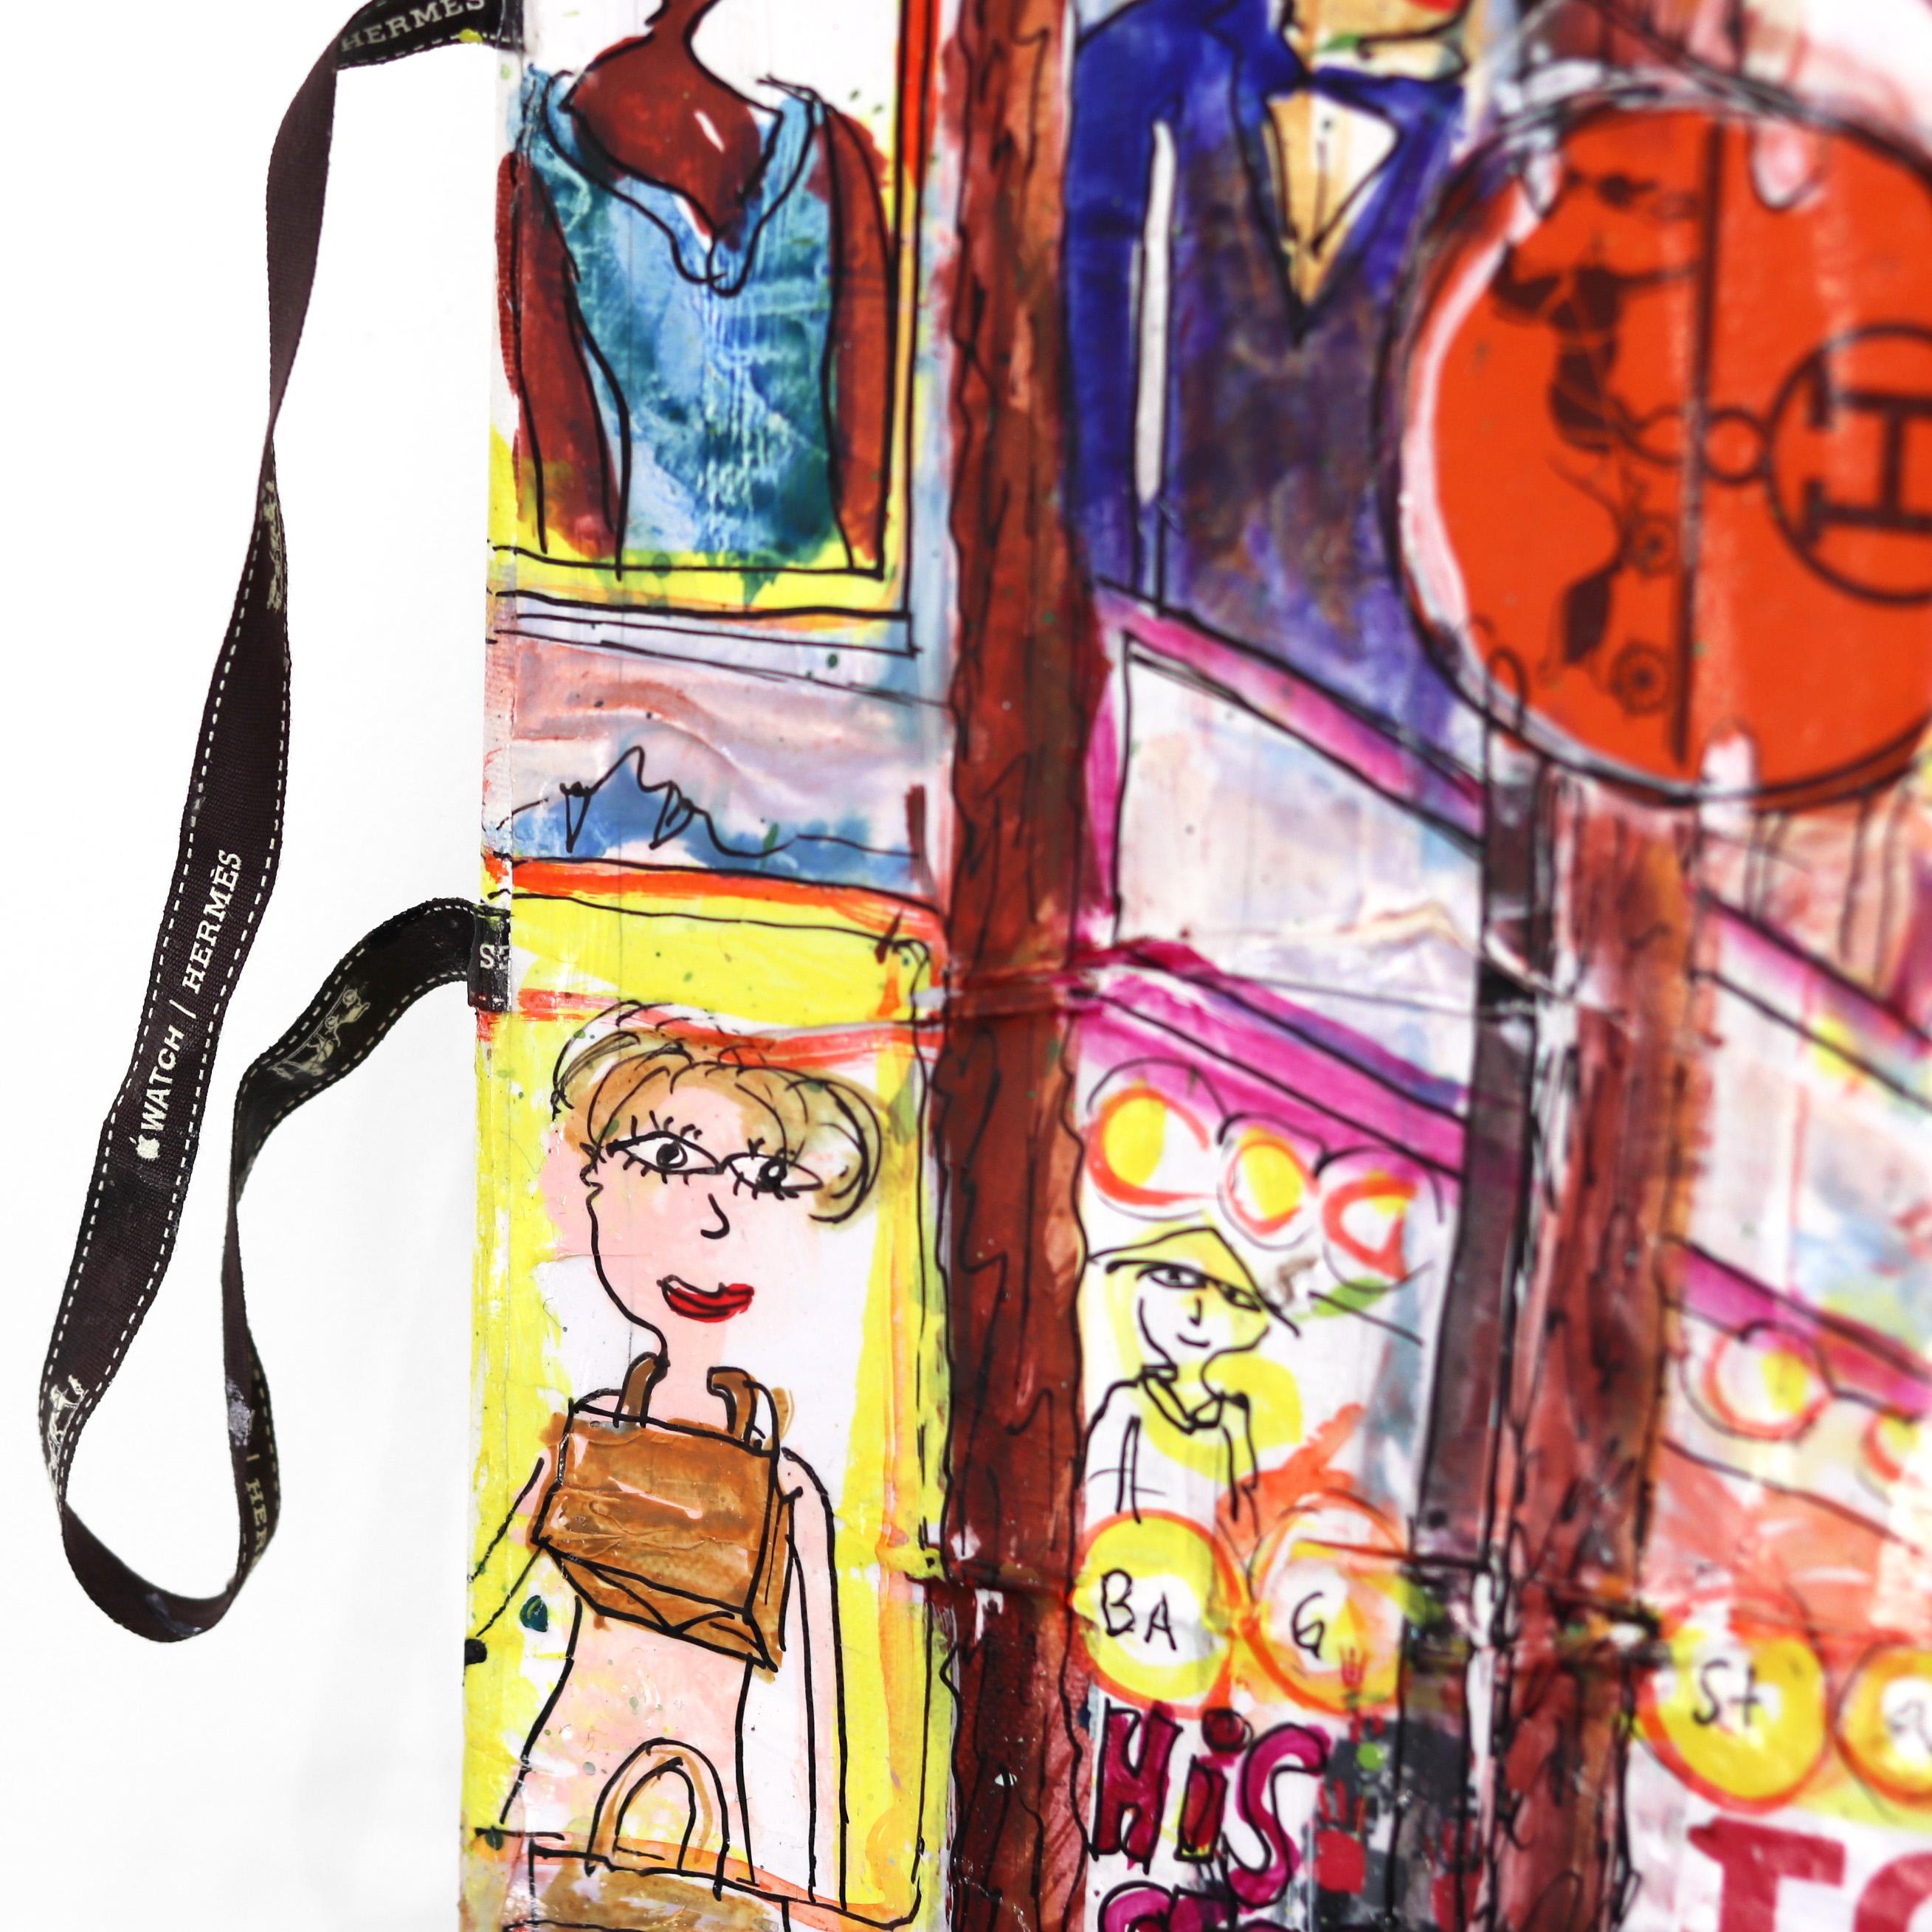 LA Bag Art Hollywood - Iconic Luxury Shopping Bags Meet Large Original Artwork For Sale 1